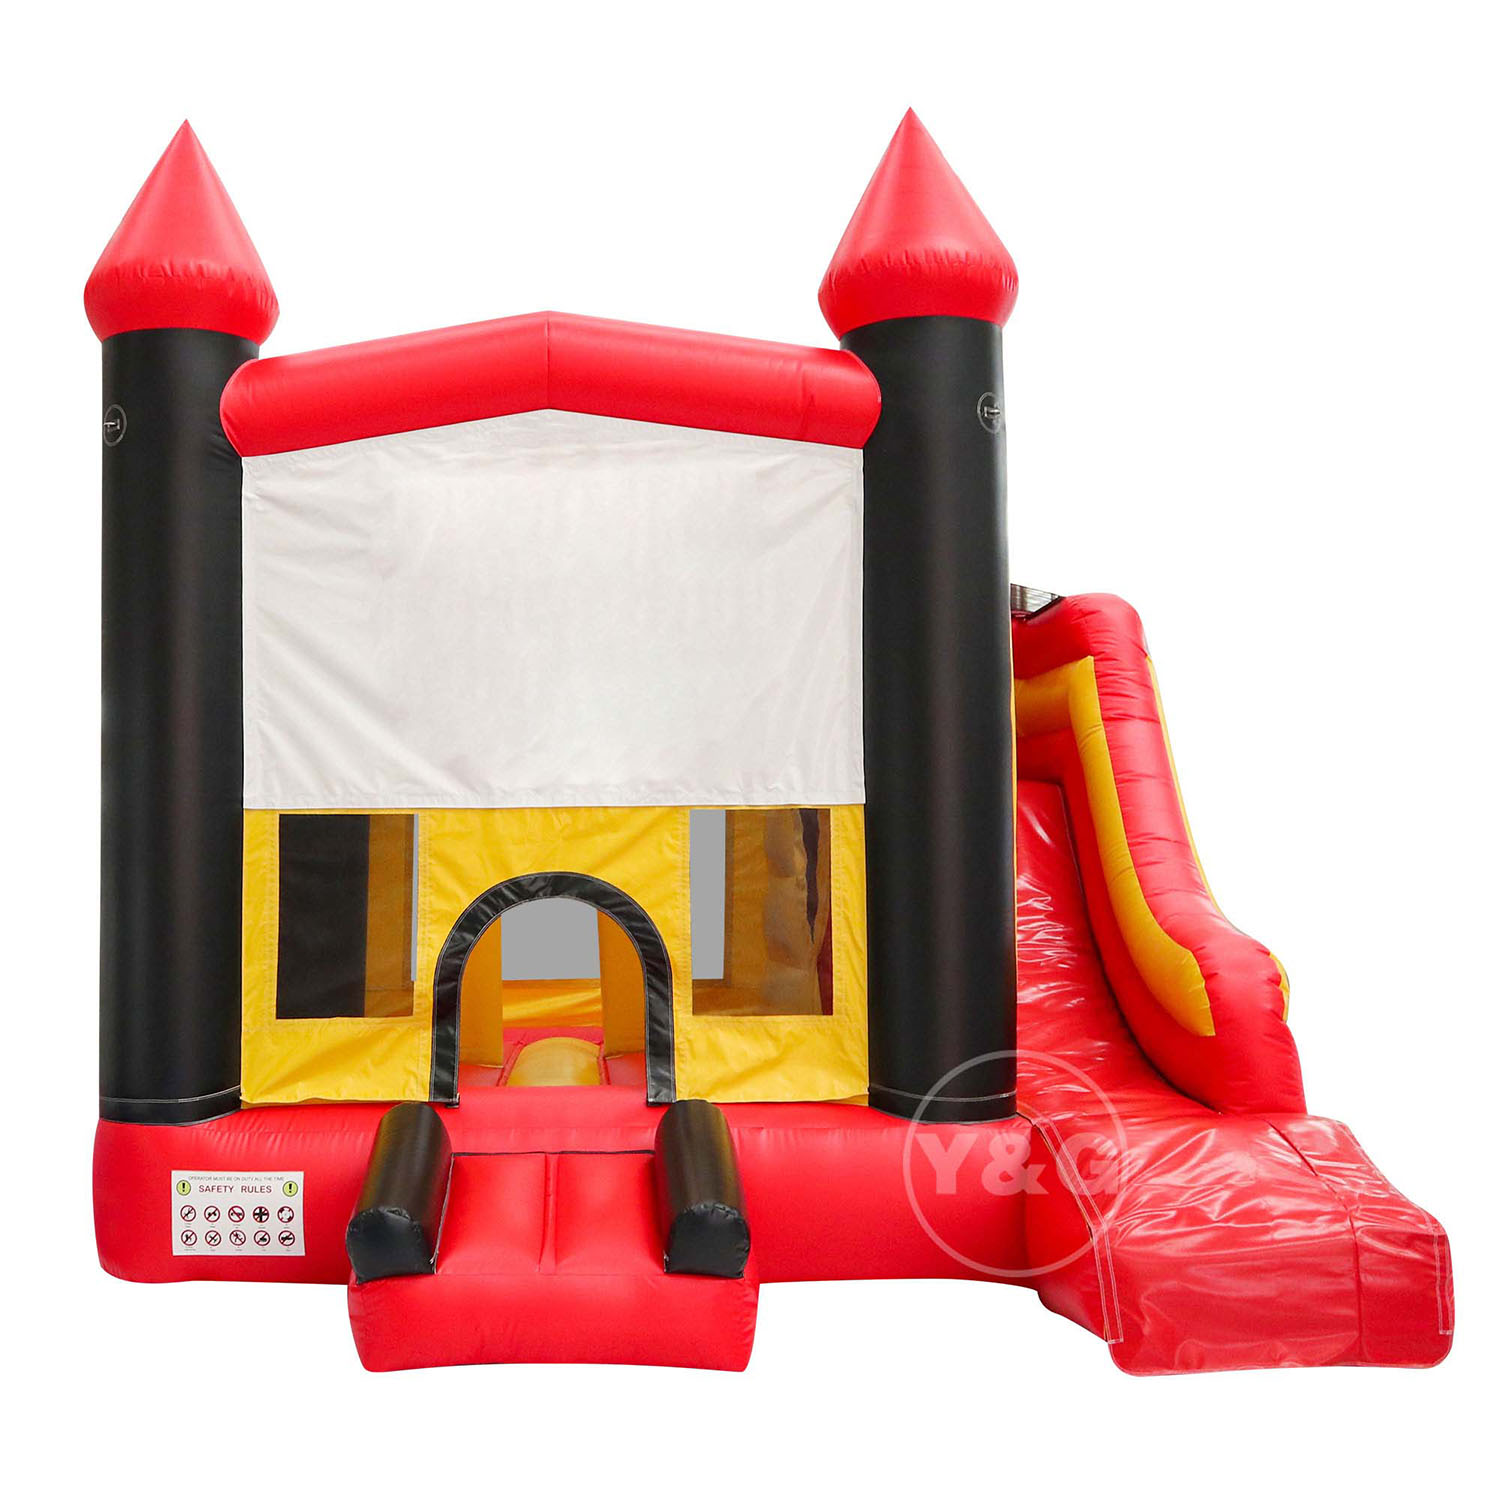 Firefighting Themed Inflatable Bounce HouseYG-155